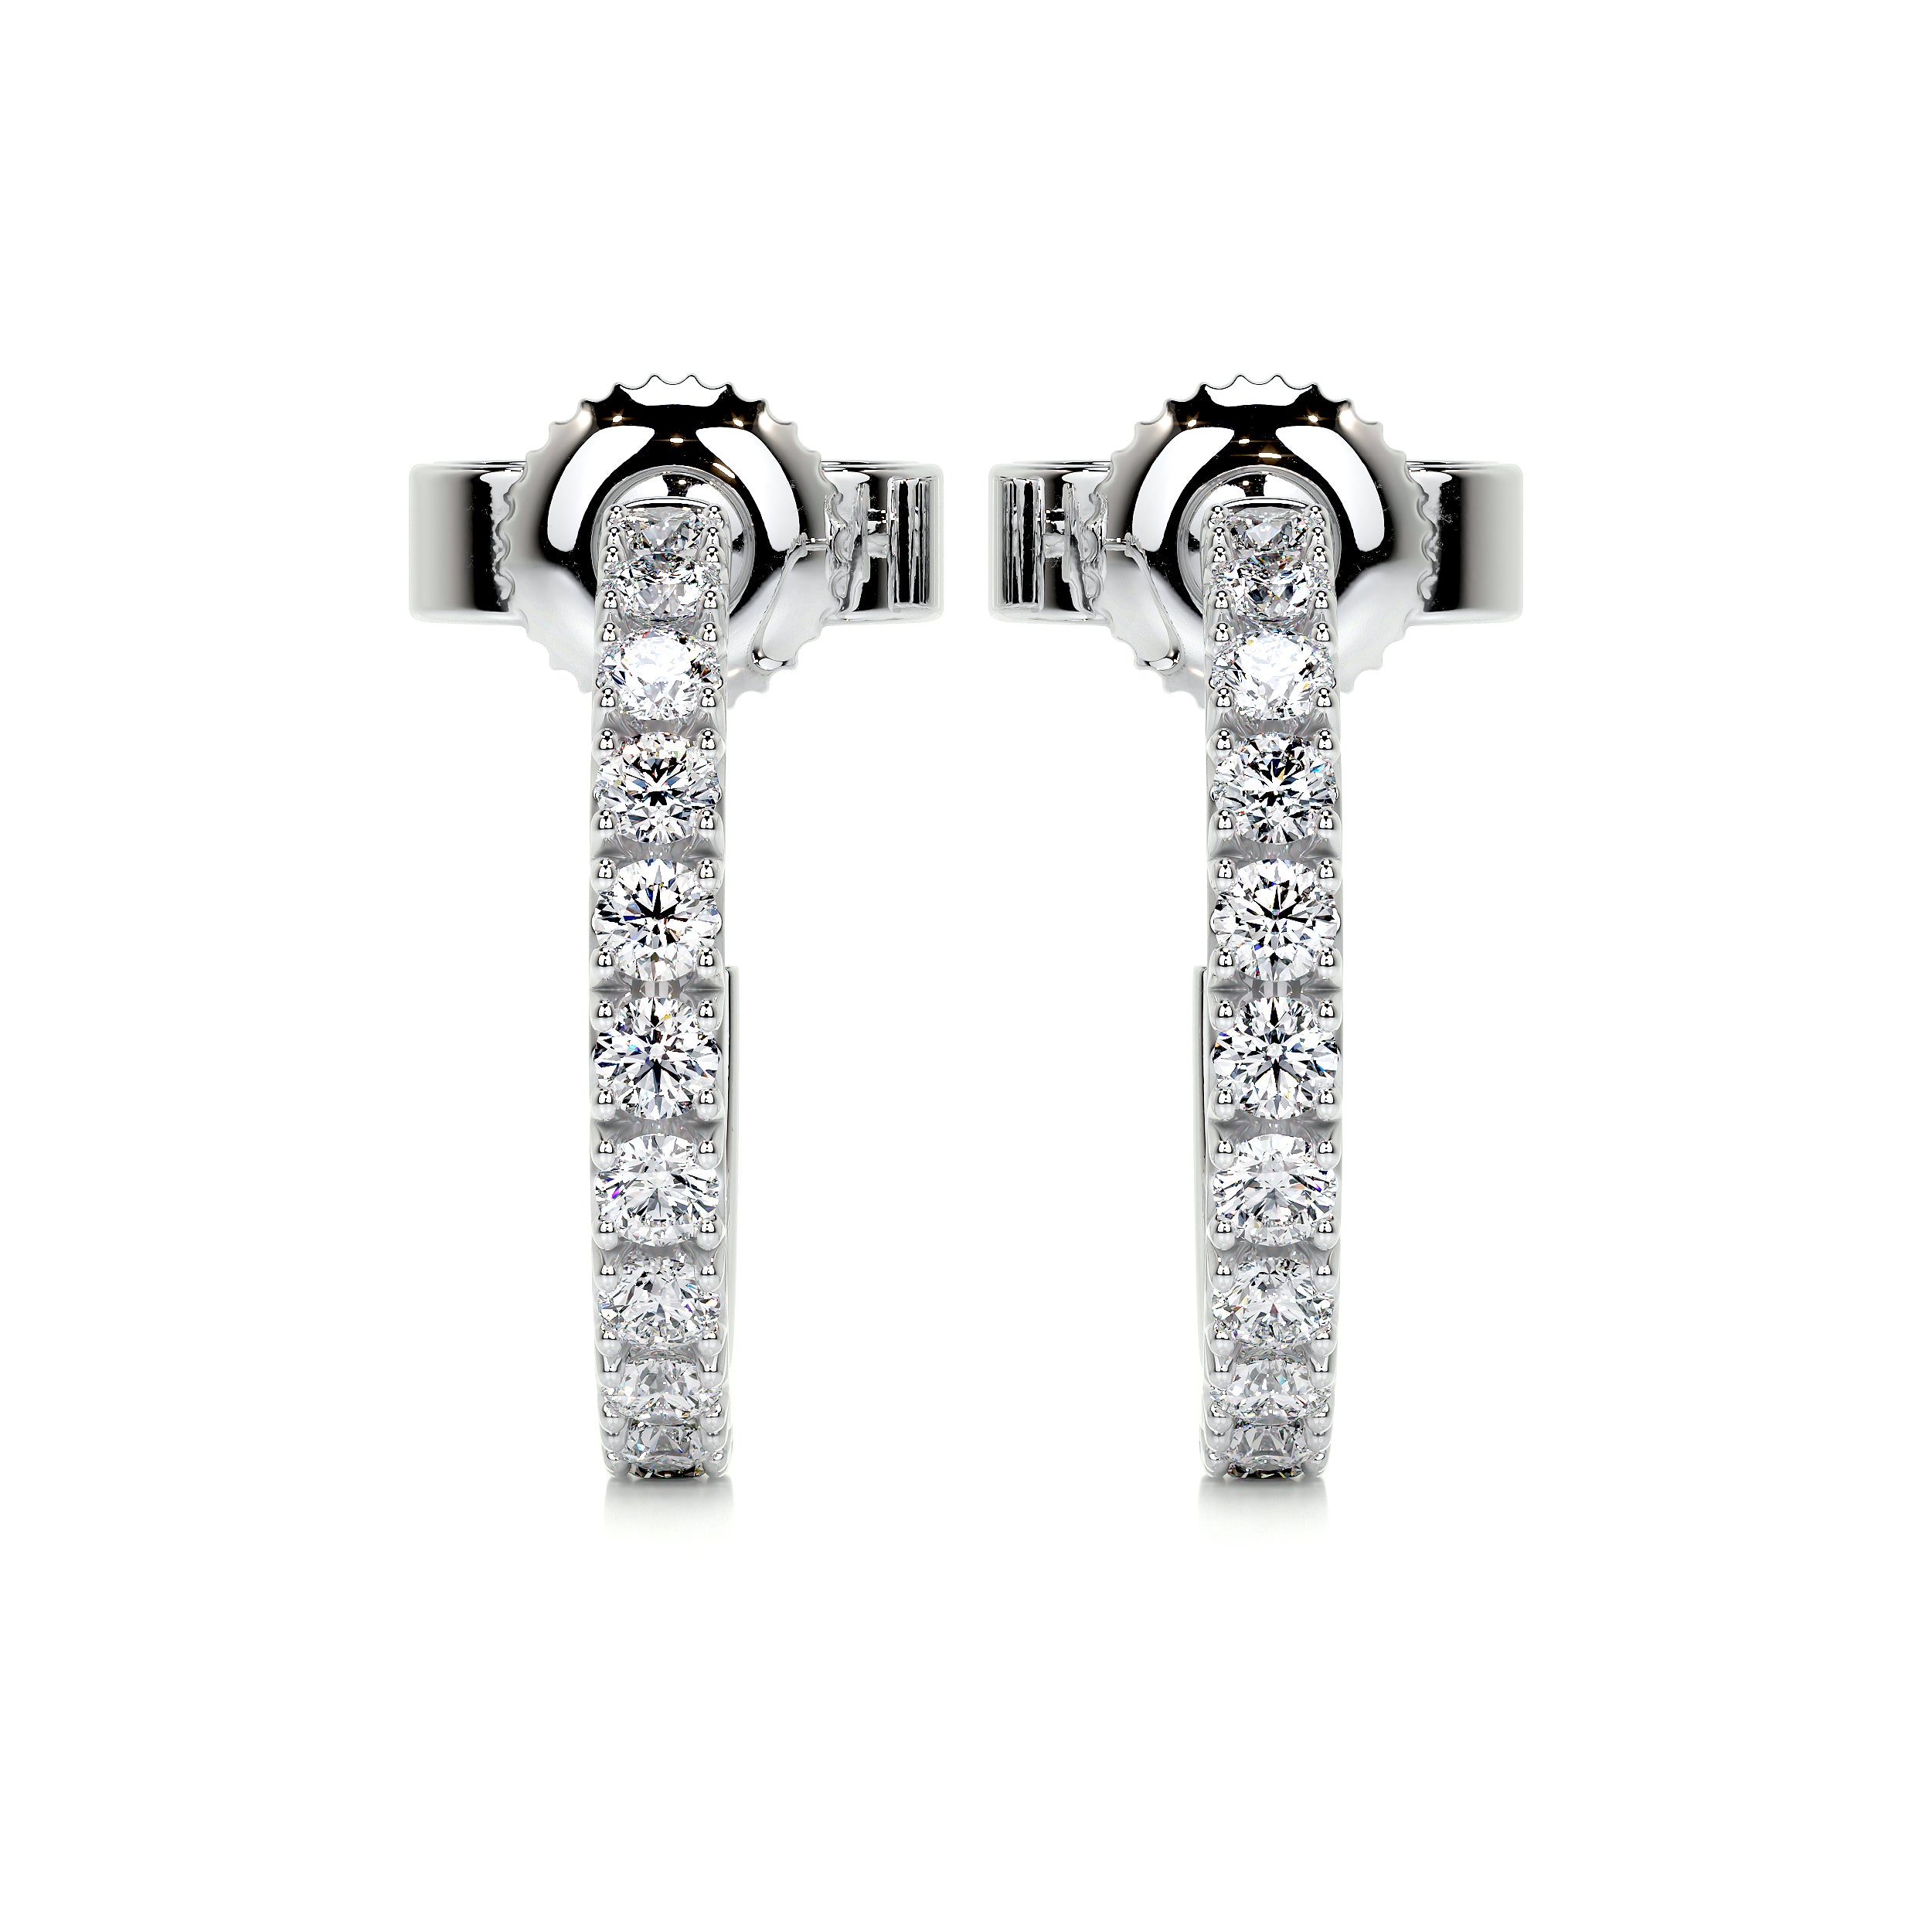 Nicole Diamond Earrings   (2.5 Carat) -14K White Gold